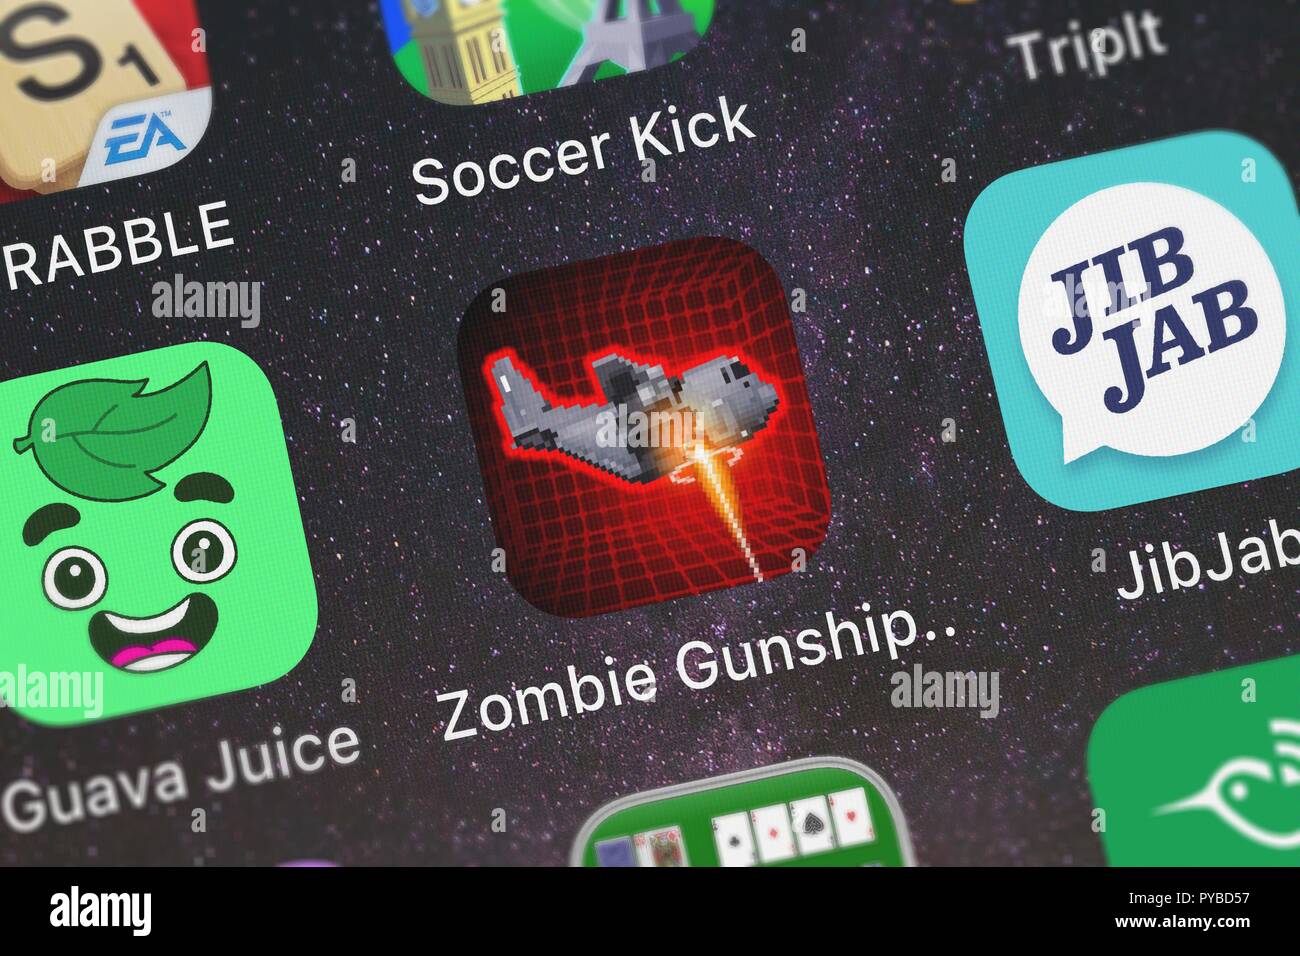 DH Kiwi Clicker APK (Android Game) - Baixar Grátis